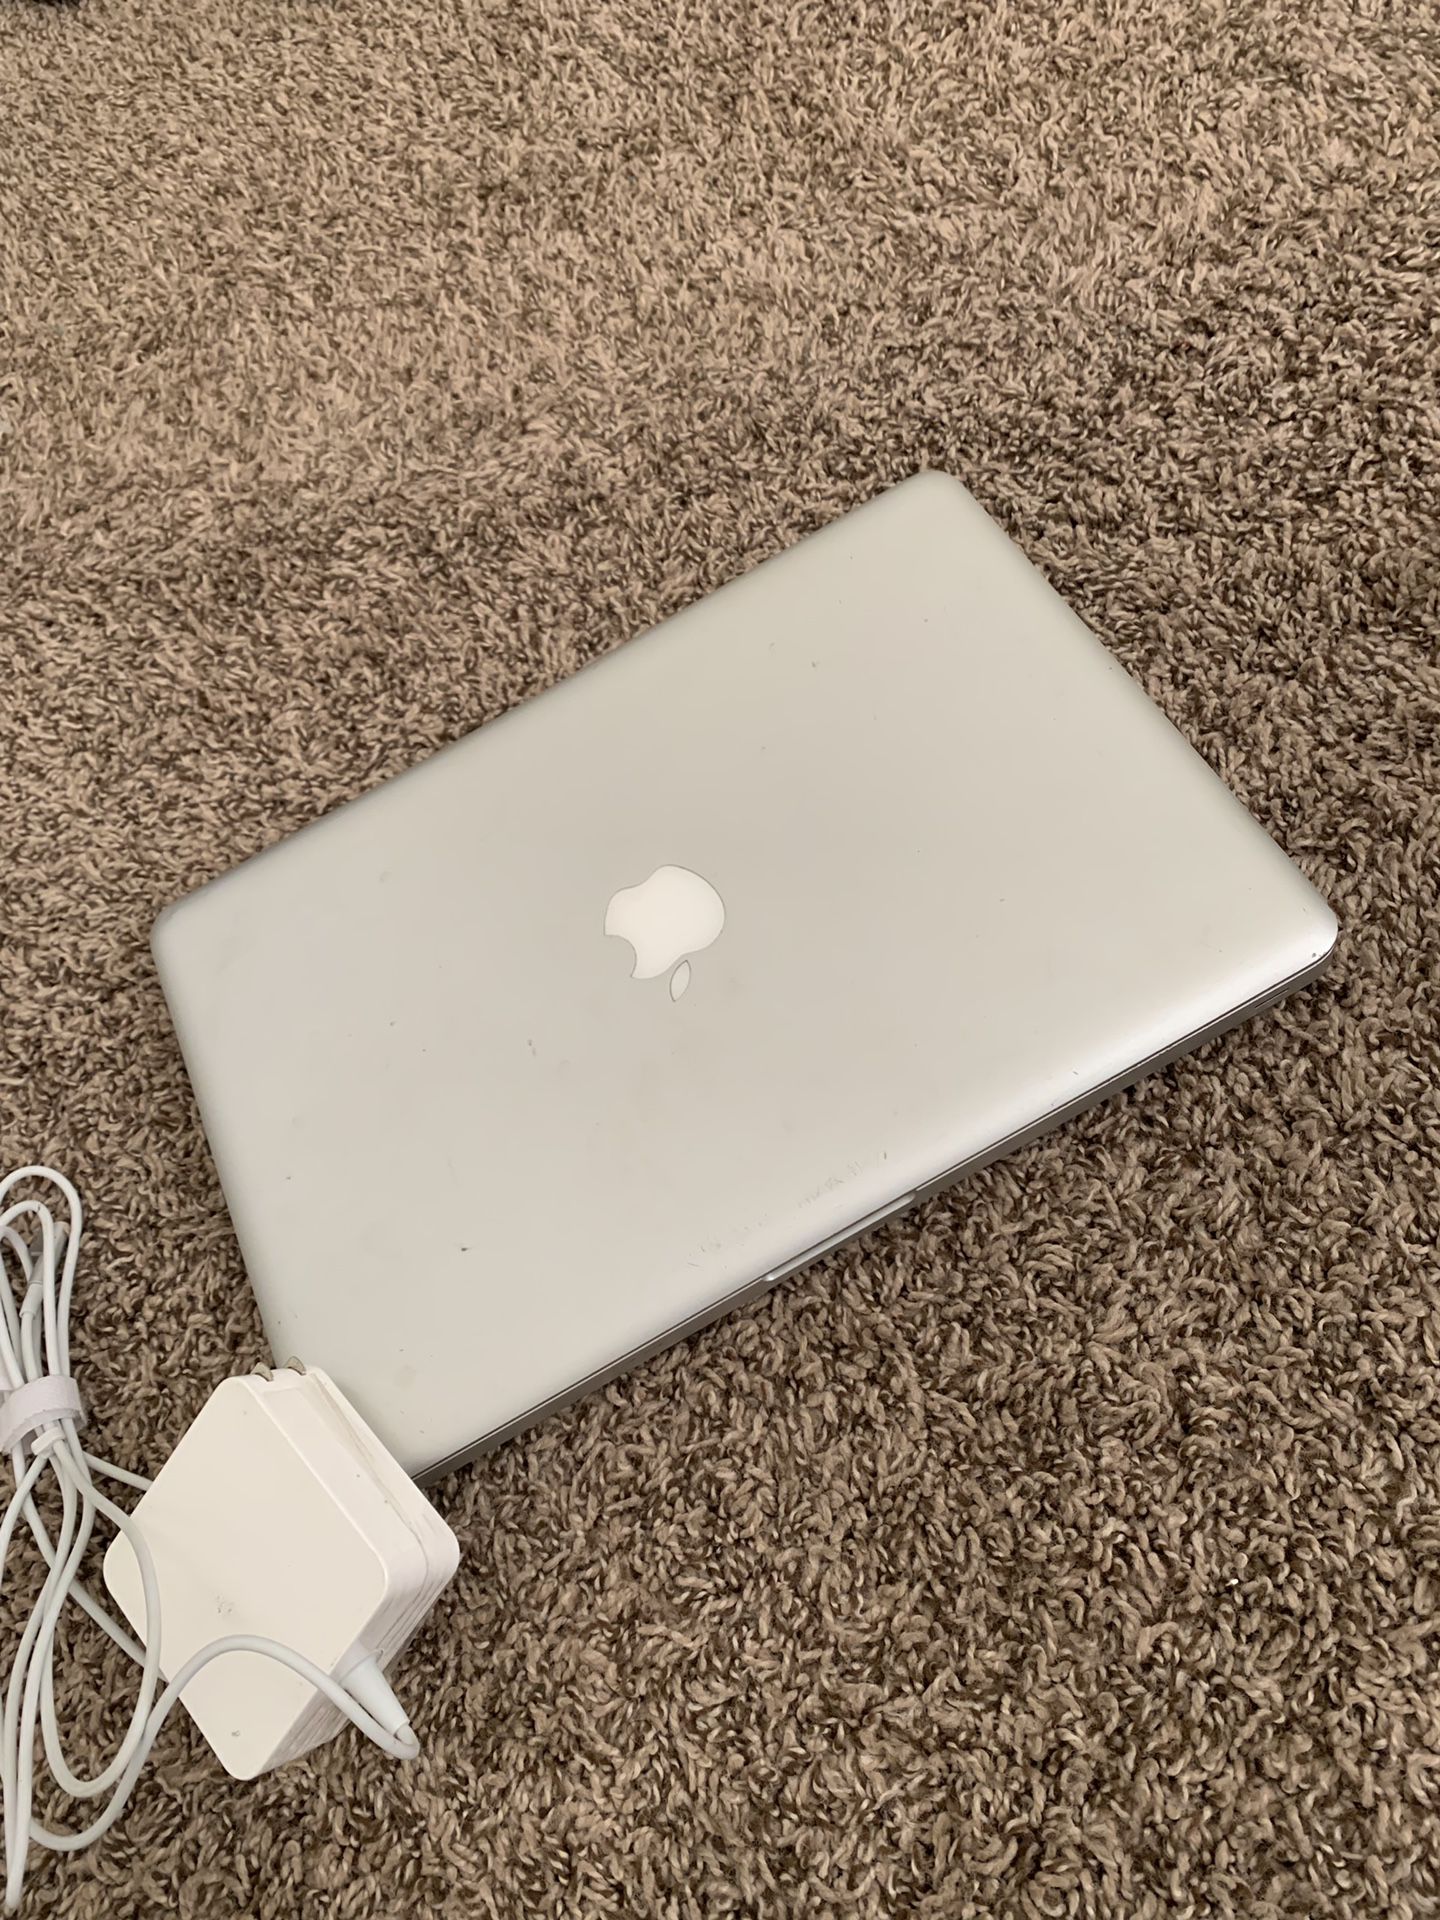 Apple MacBook Pro $450 OBO